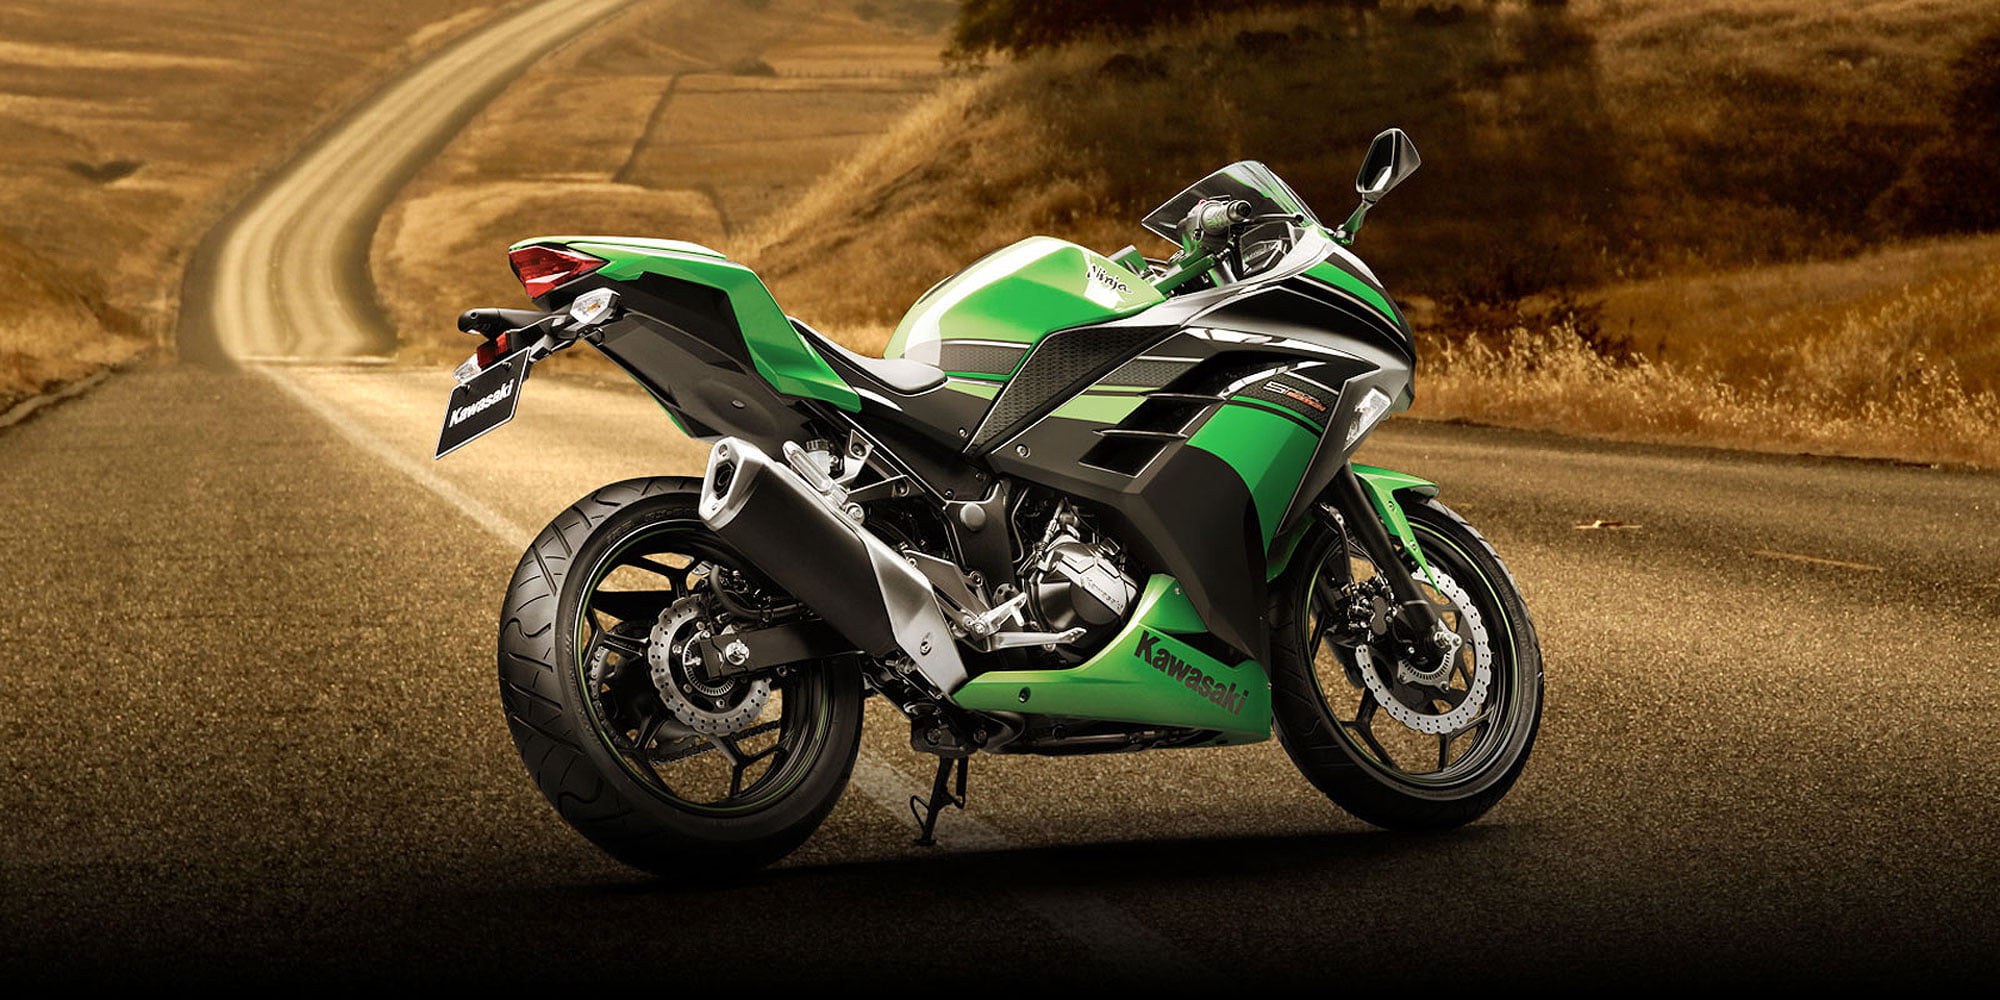 2013 Kawasaki ER-6nL, green and black sports bike, Motorcycles